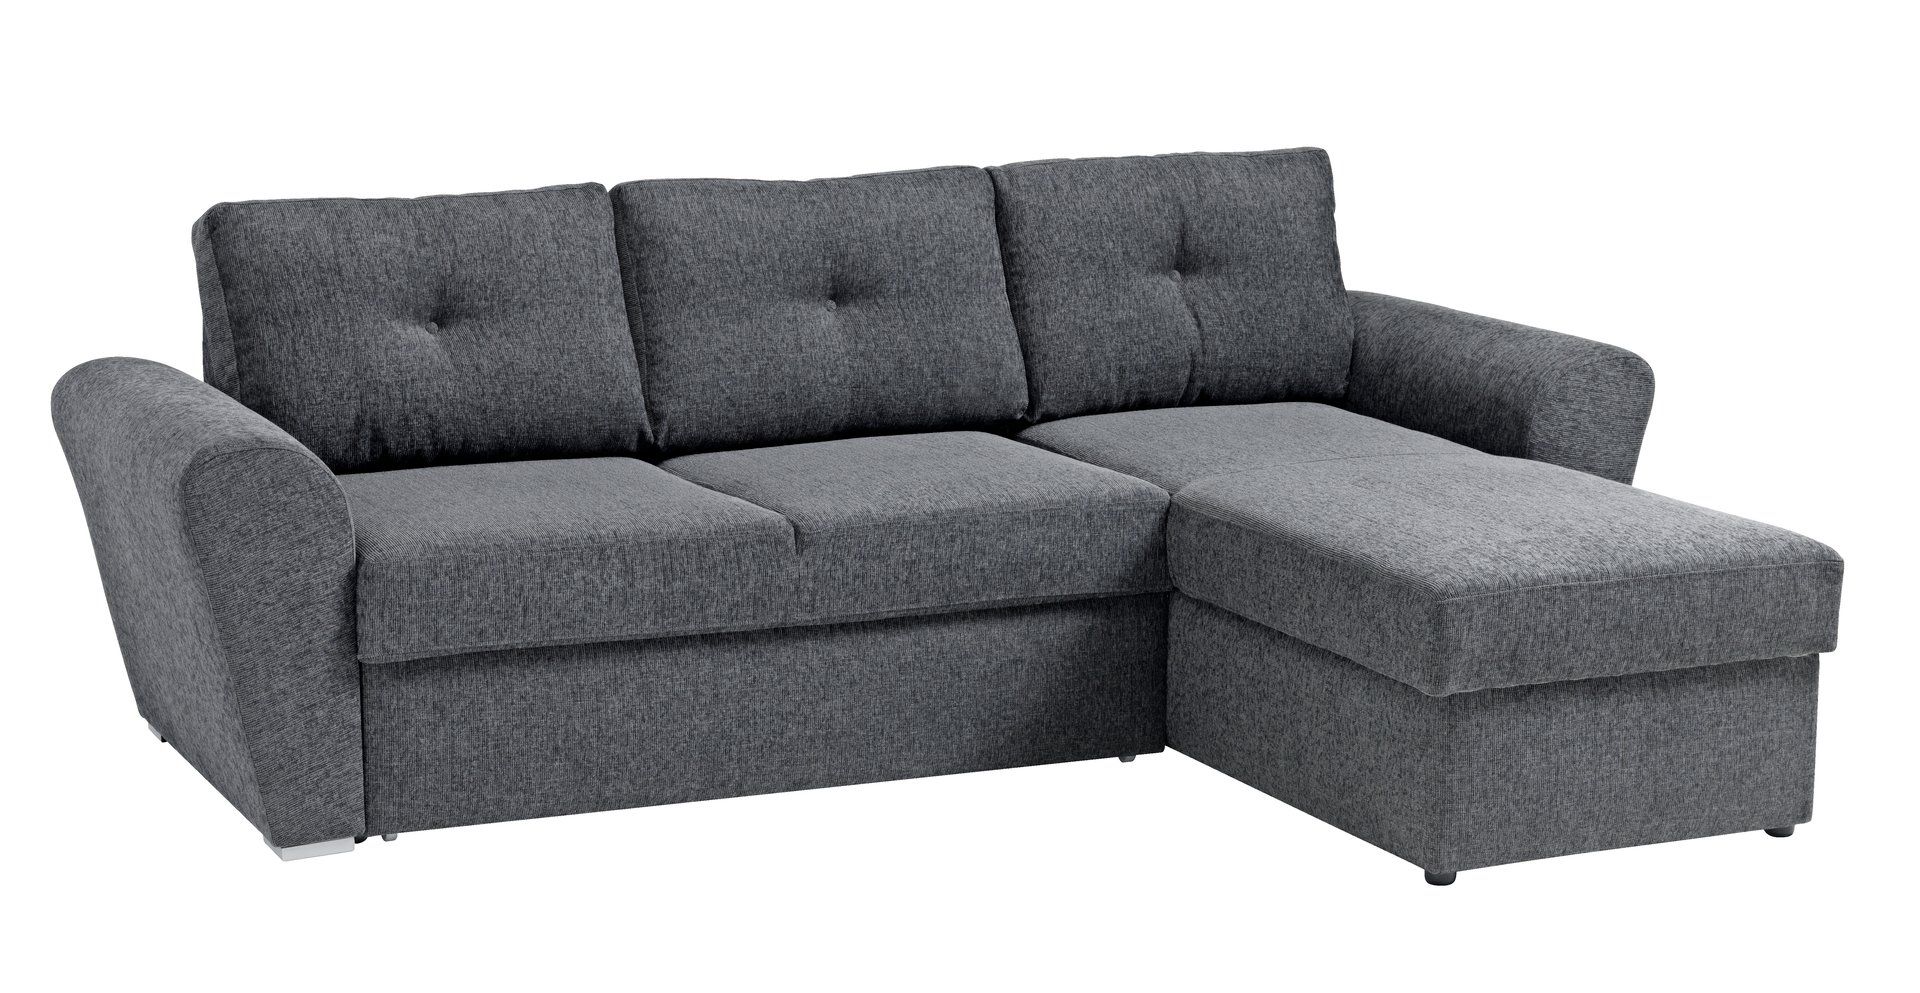 vejlby sofa bed instructions